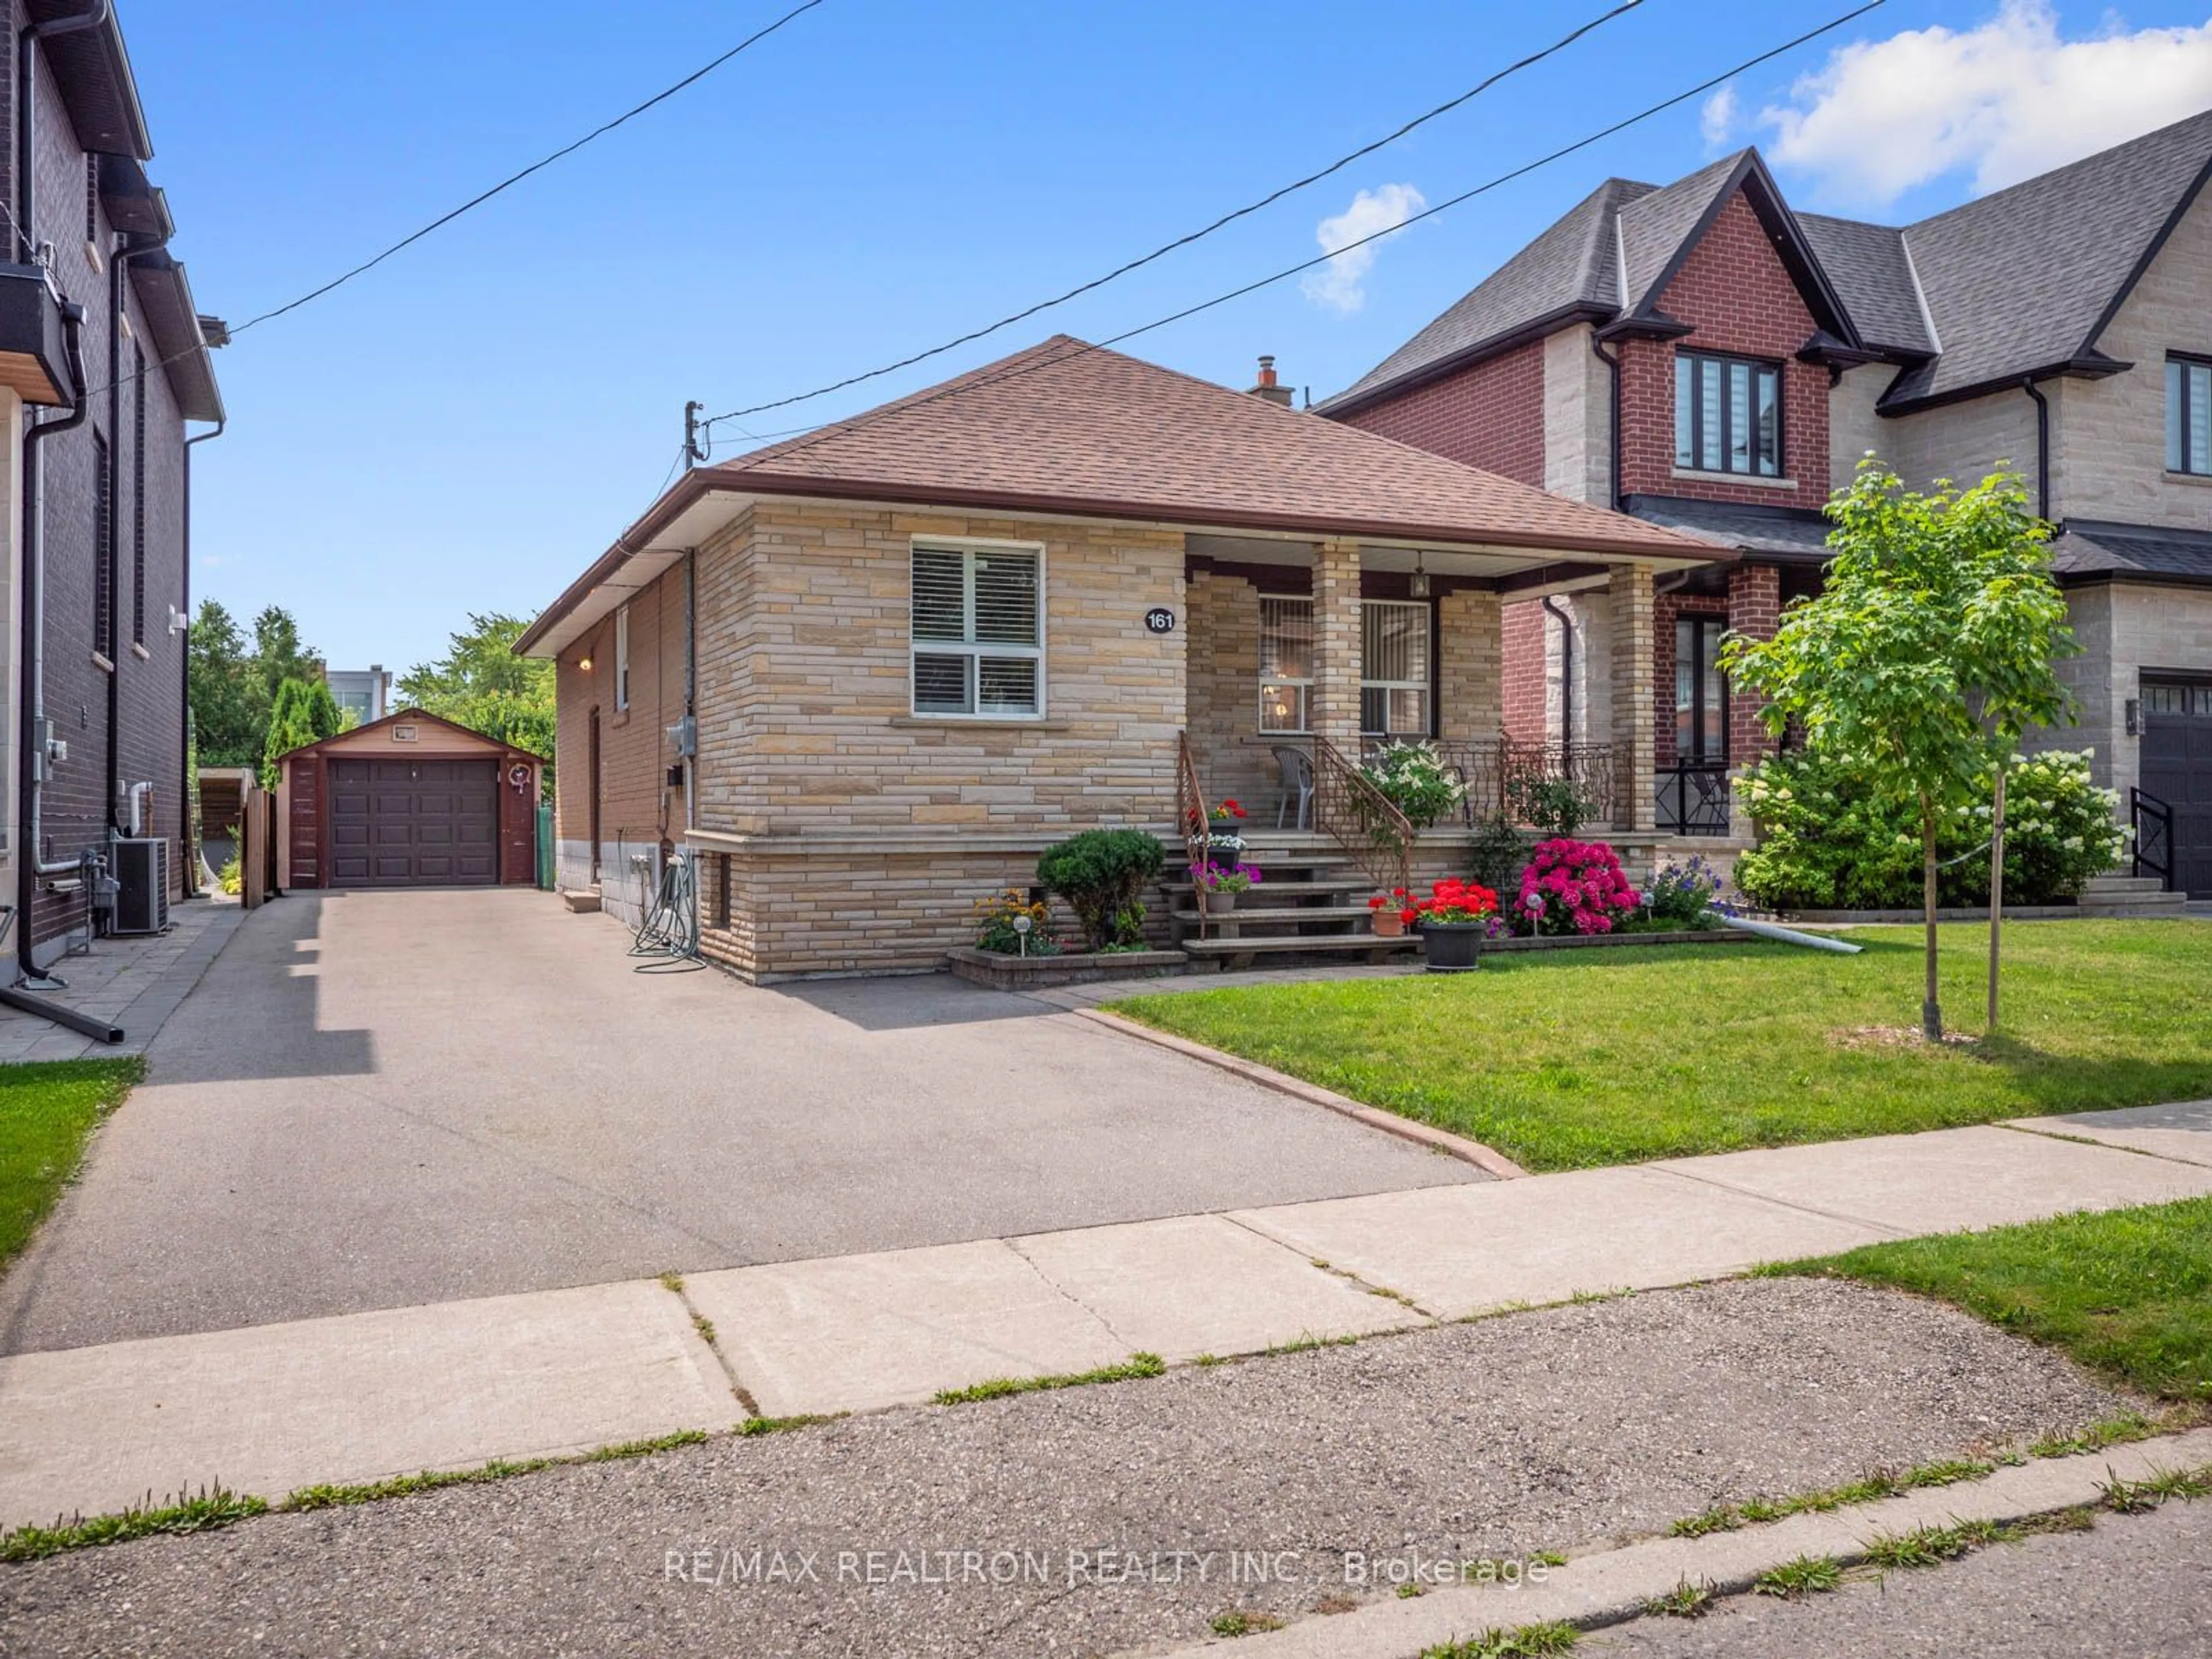 Frontside or backside of a home for 161 Reiner Rd, Toronto Ontario M3H 2L8